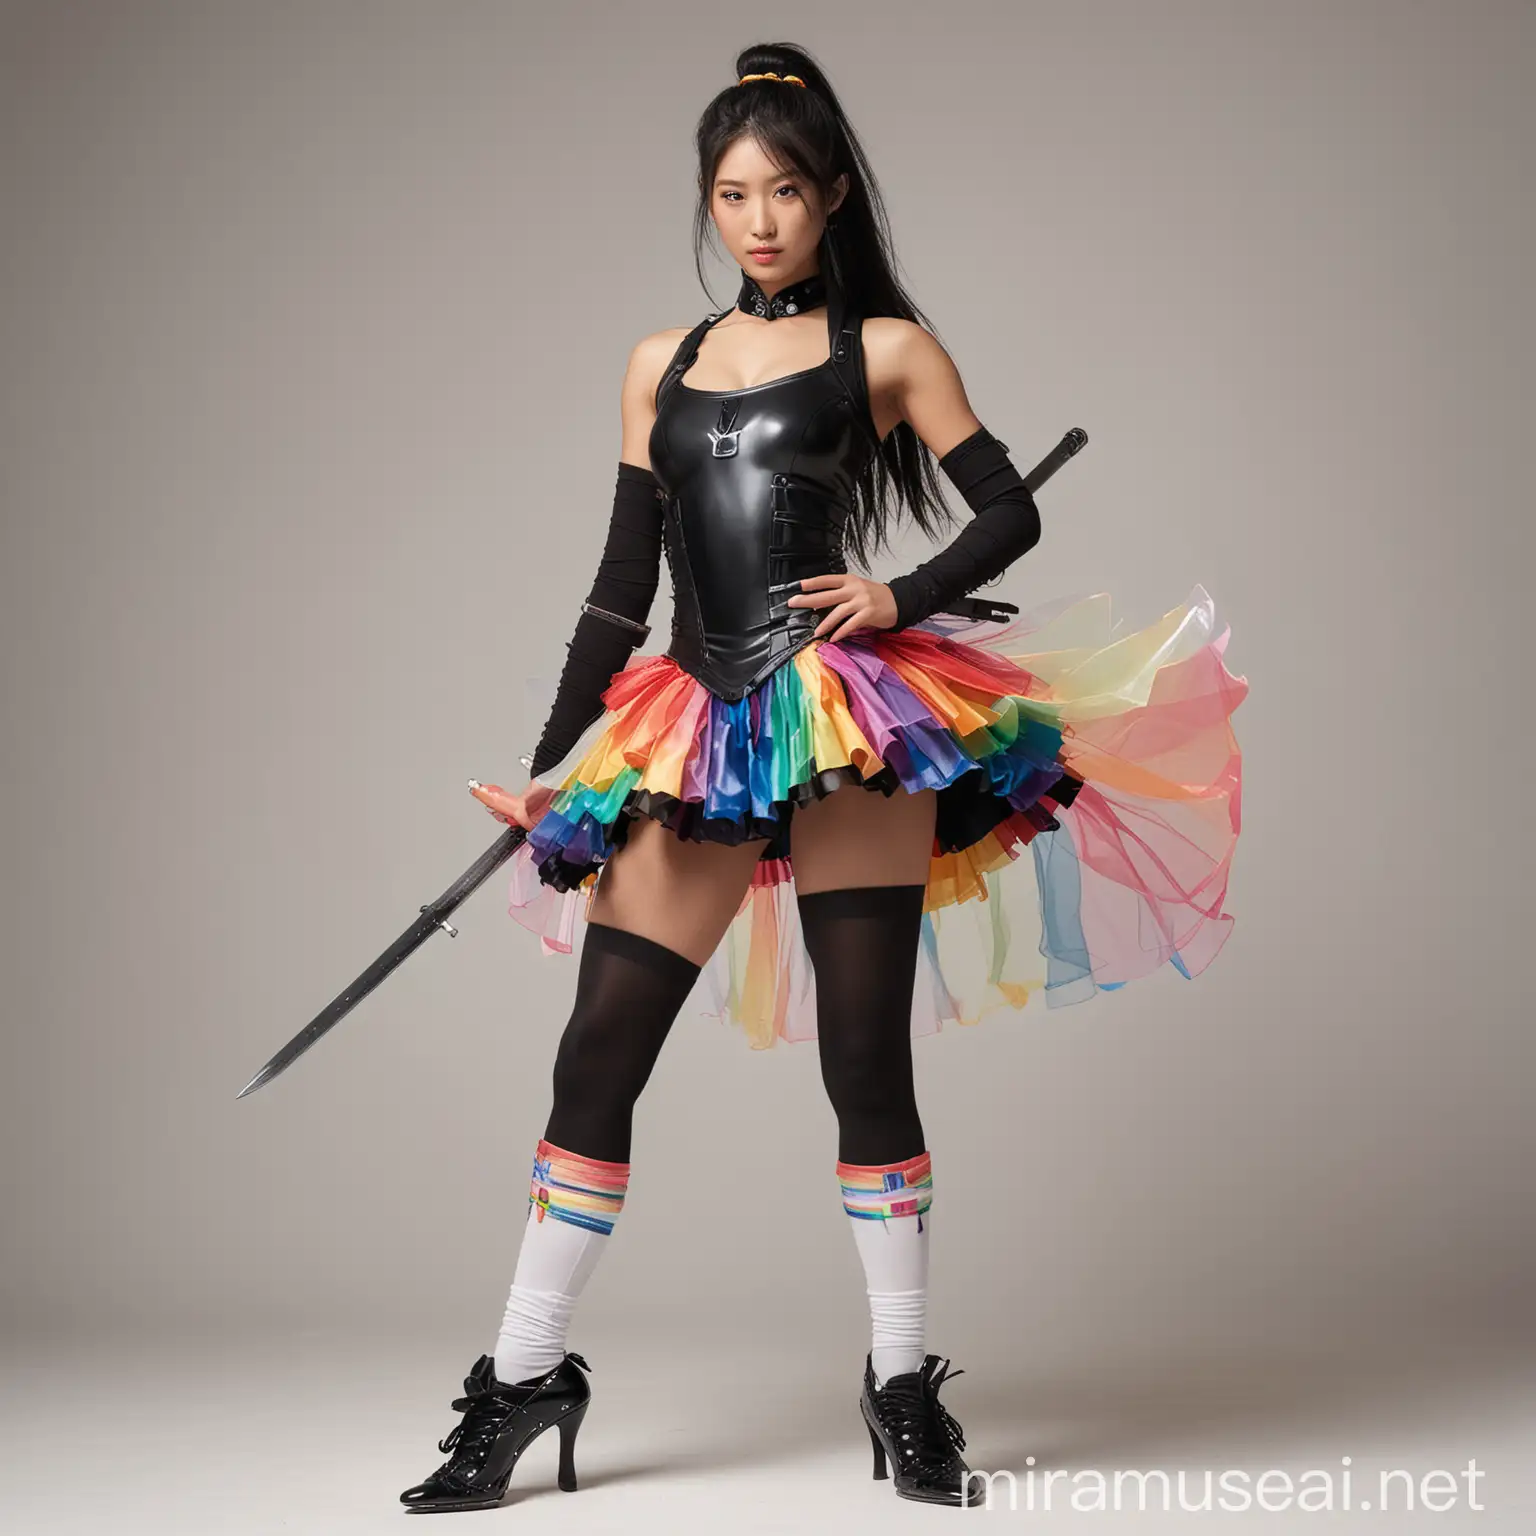 Japanese Female Samurai Knight in Rainbow Ballerina Tutu Armor